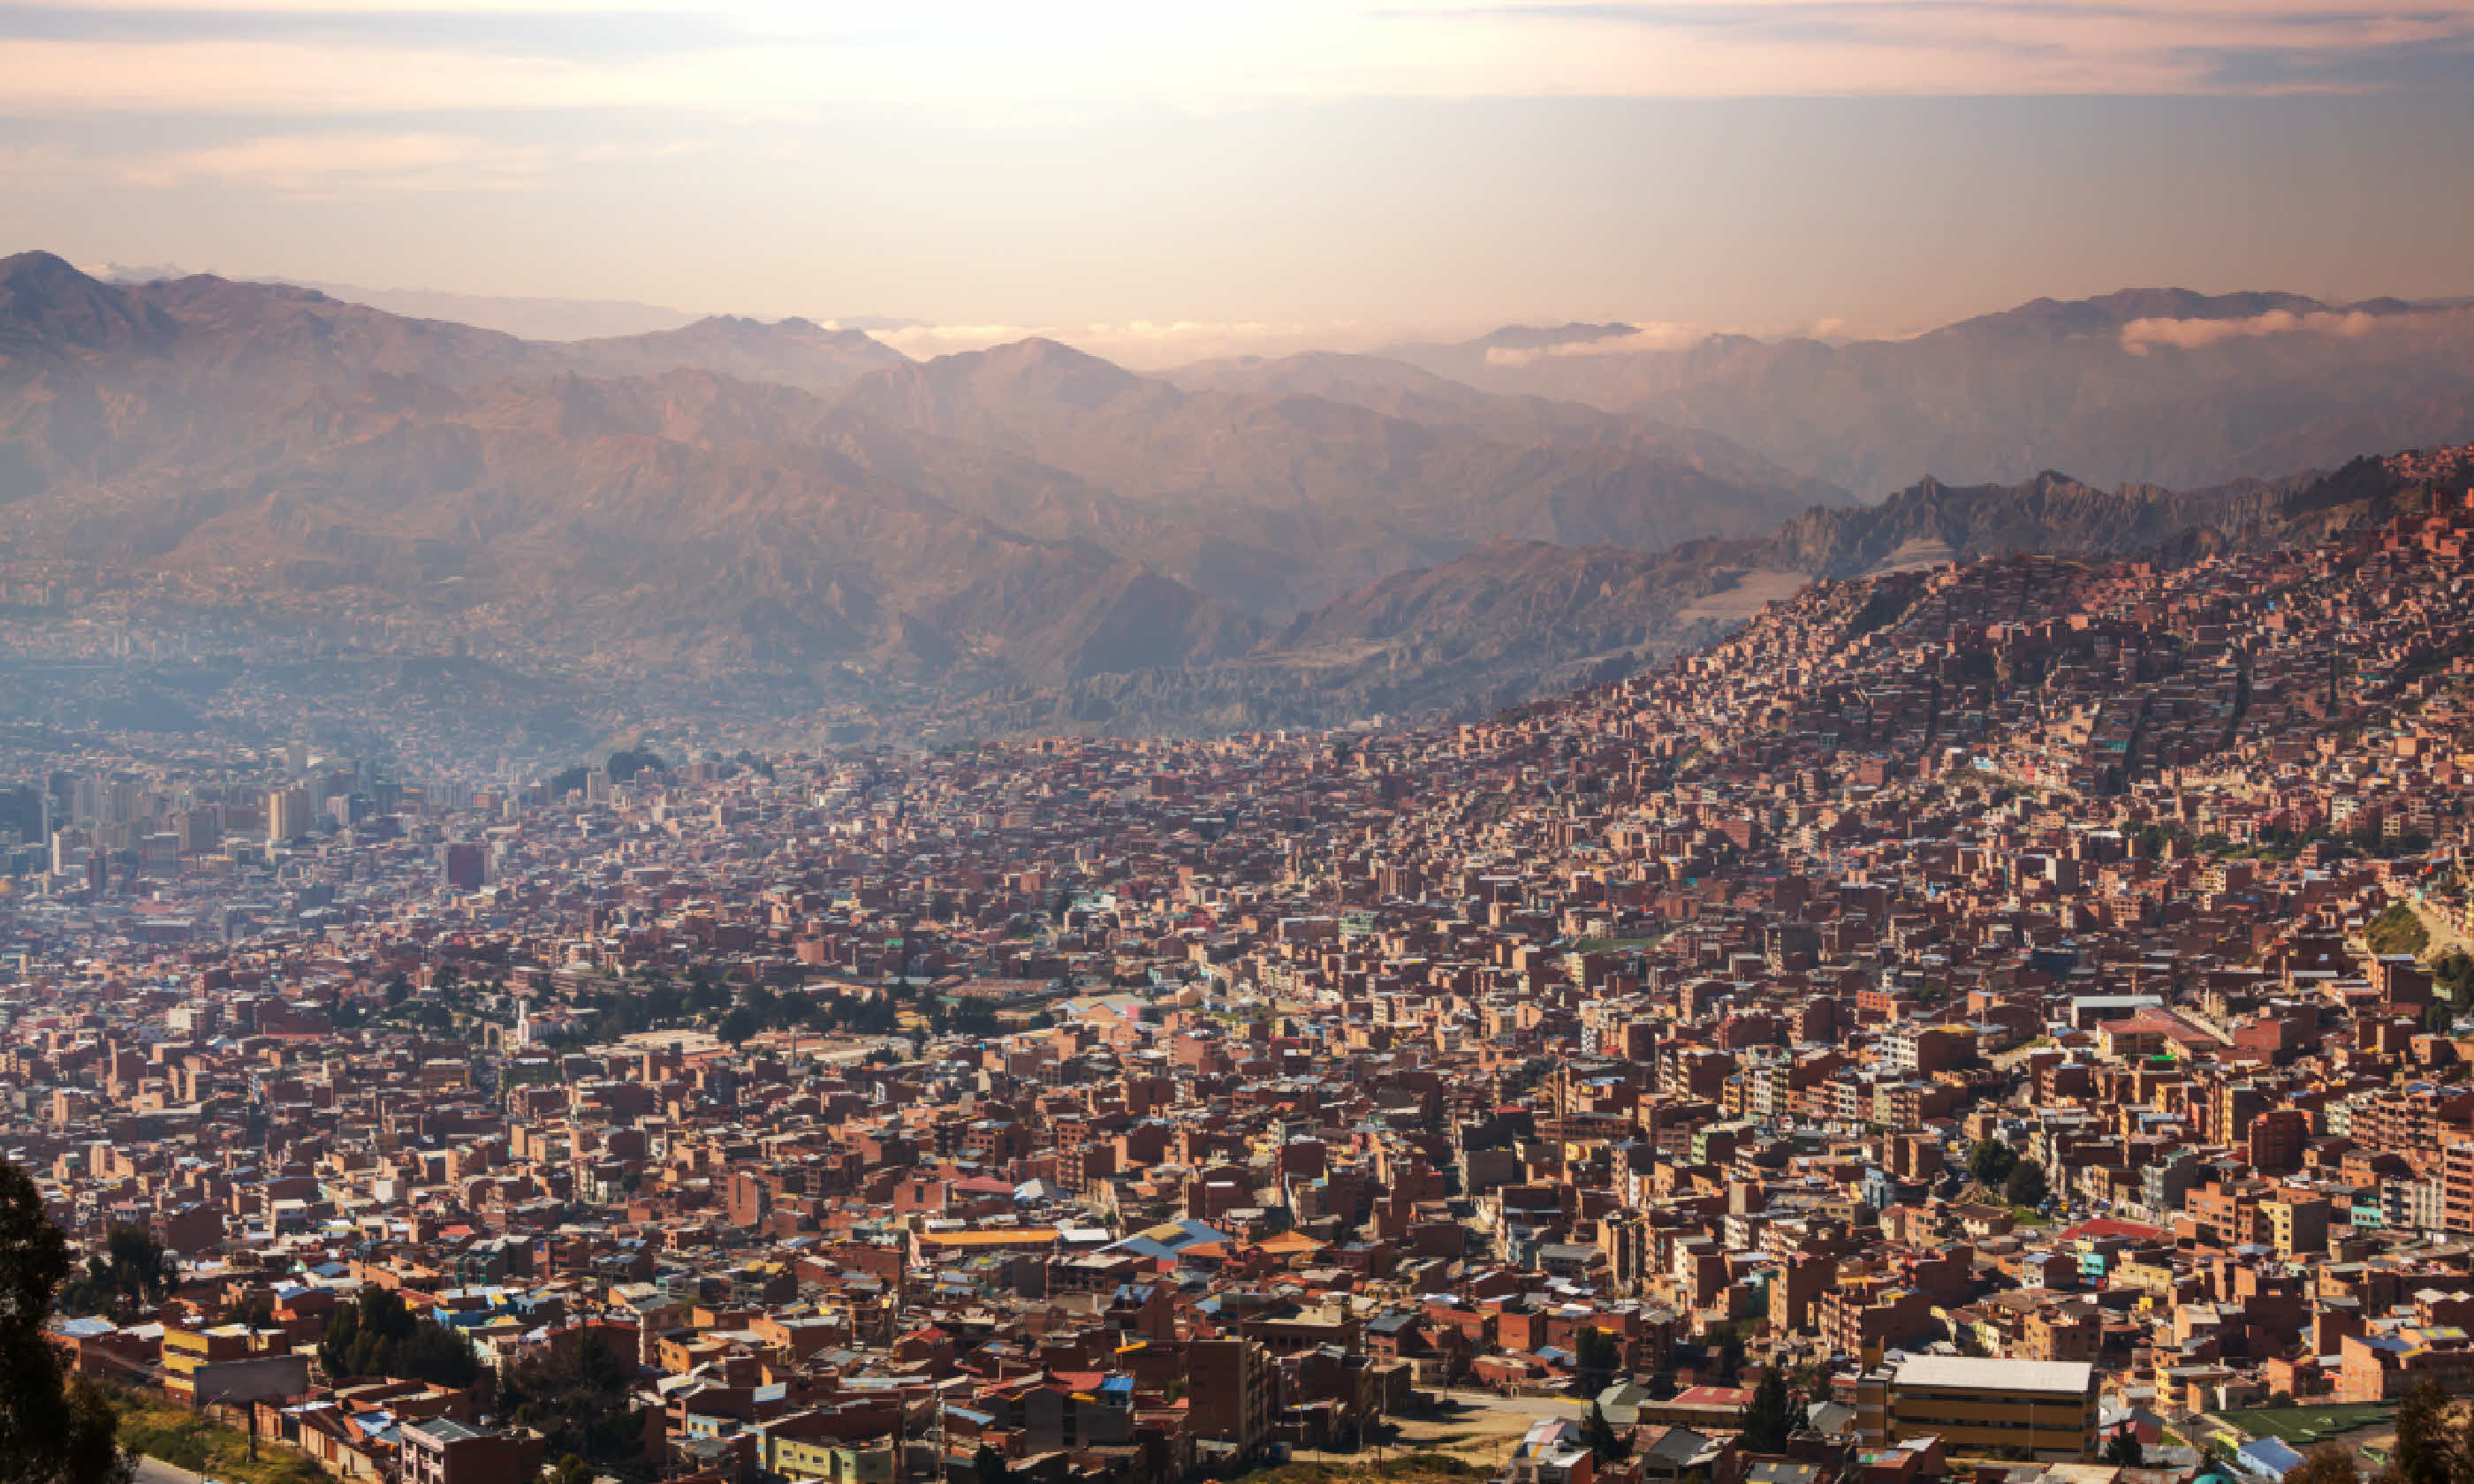 La Paz at dusk (Shutterstock: see credit below)